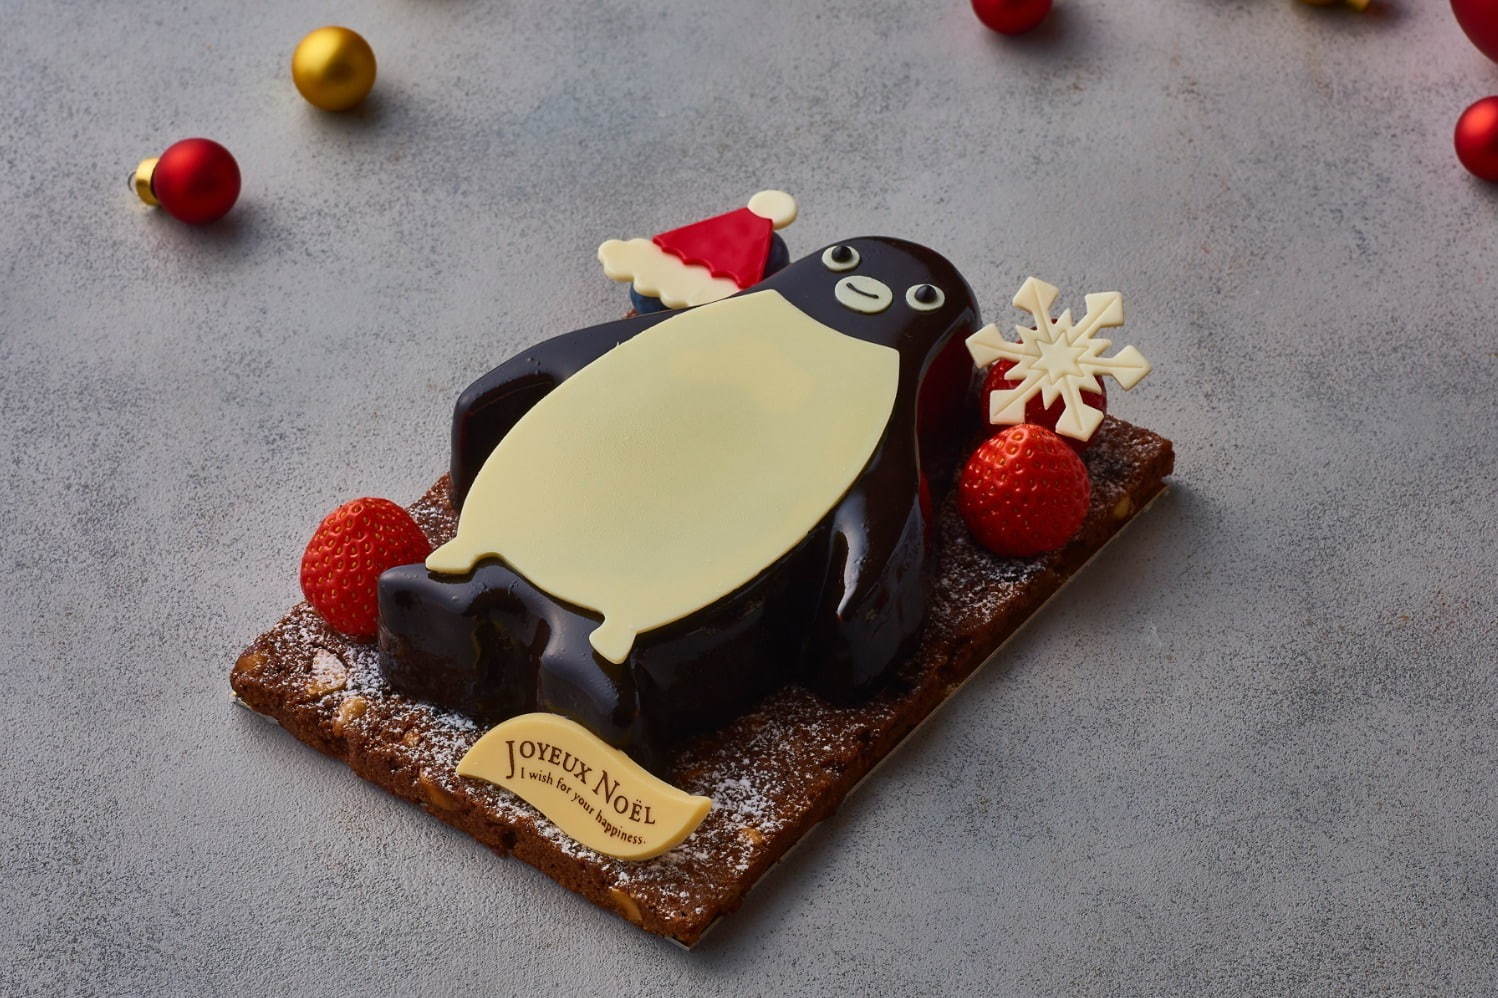 Suicaのペンギン ルビーチョコレートケーキ 4,600円/早期予約・会員 4,140円 縦16cm×横10cm
※12月23日(水)～12月25日(金)販売。